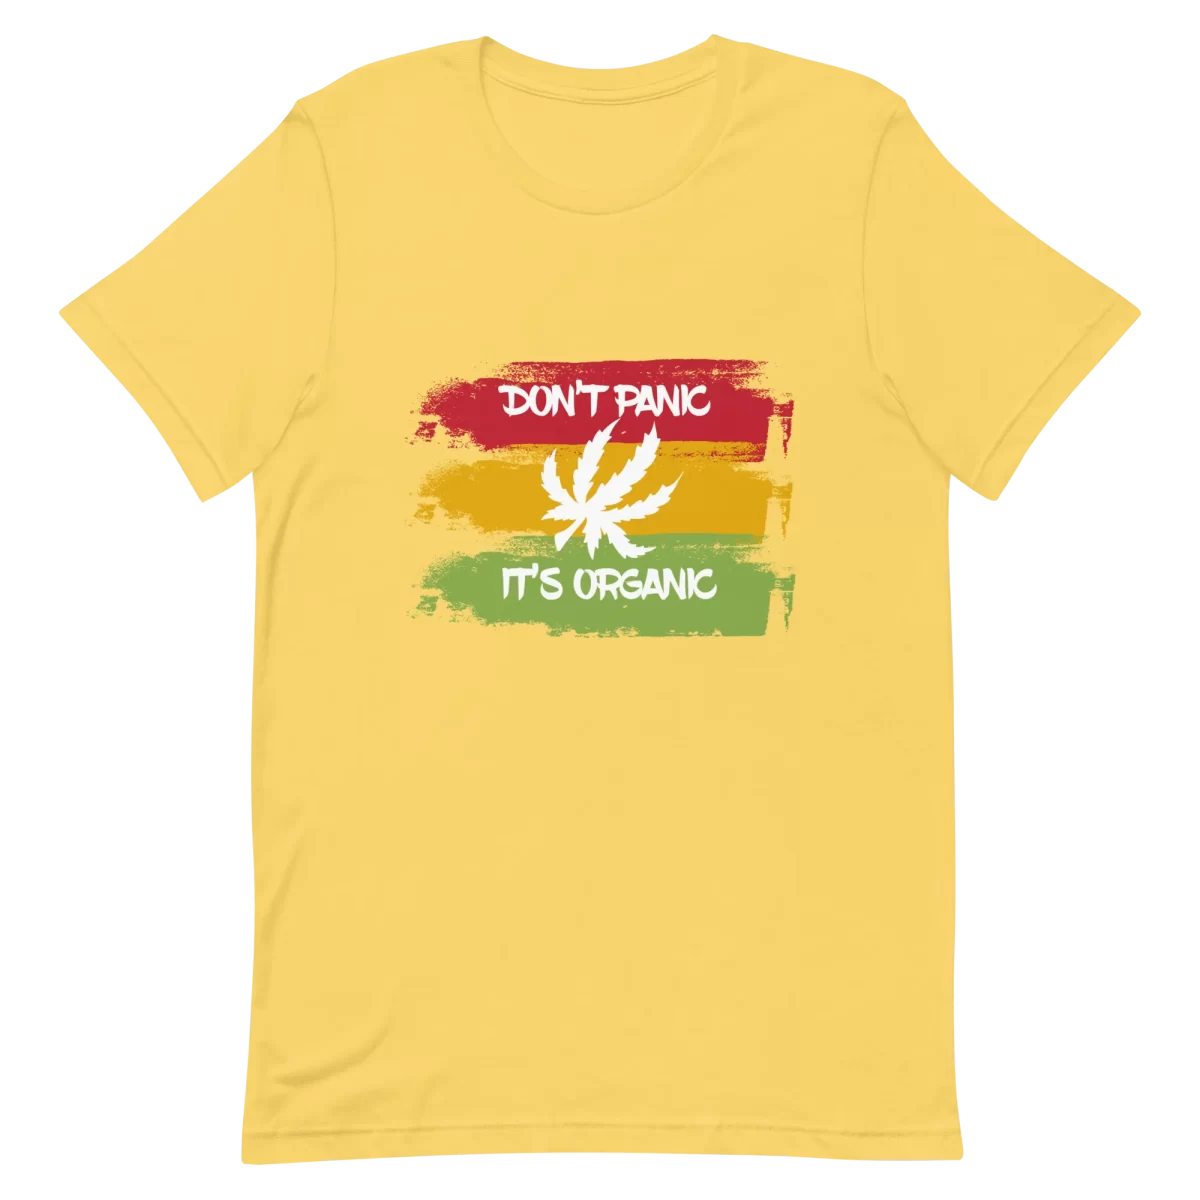 Unisex T-Shirt - Don't panic its organic - Yellow